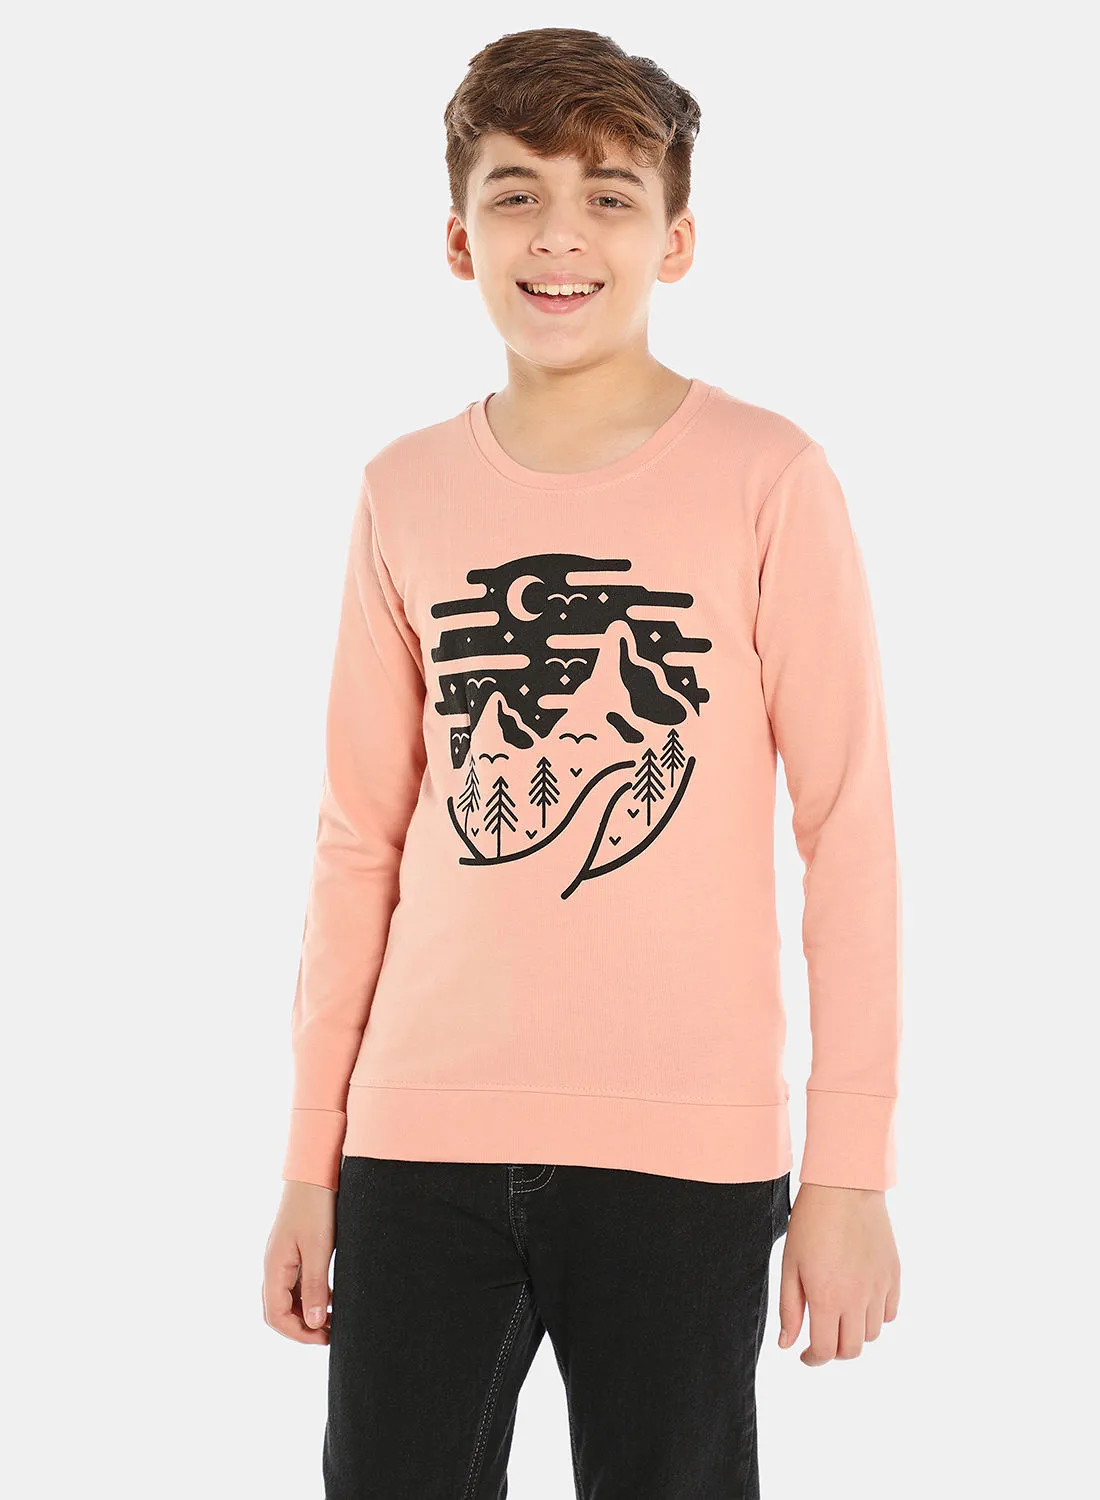 QUWA Comfortable Boys Graphic Printed Long Sleeve cotton Crew Neck Sweatshirt Pink/Black